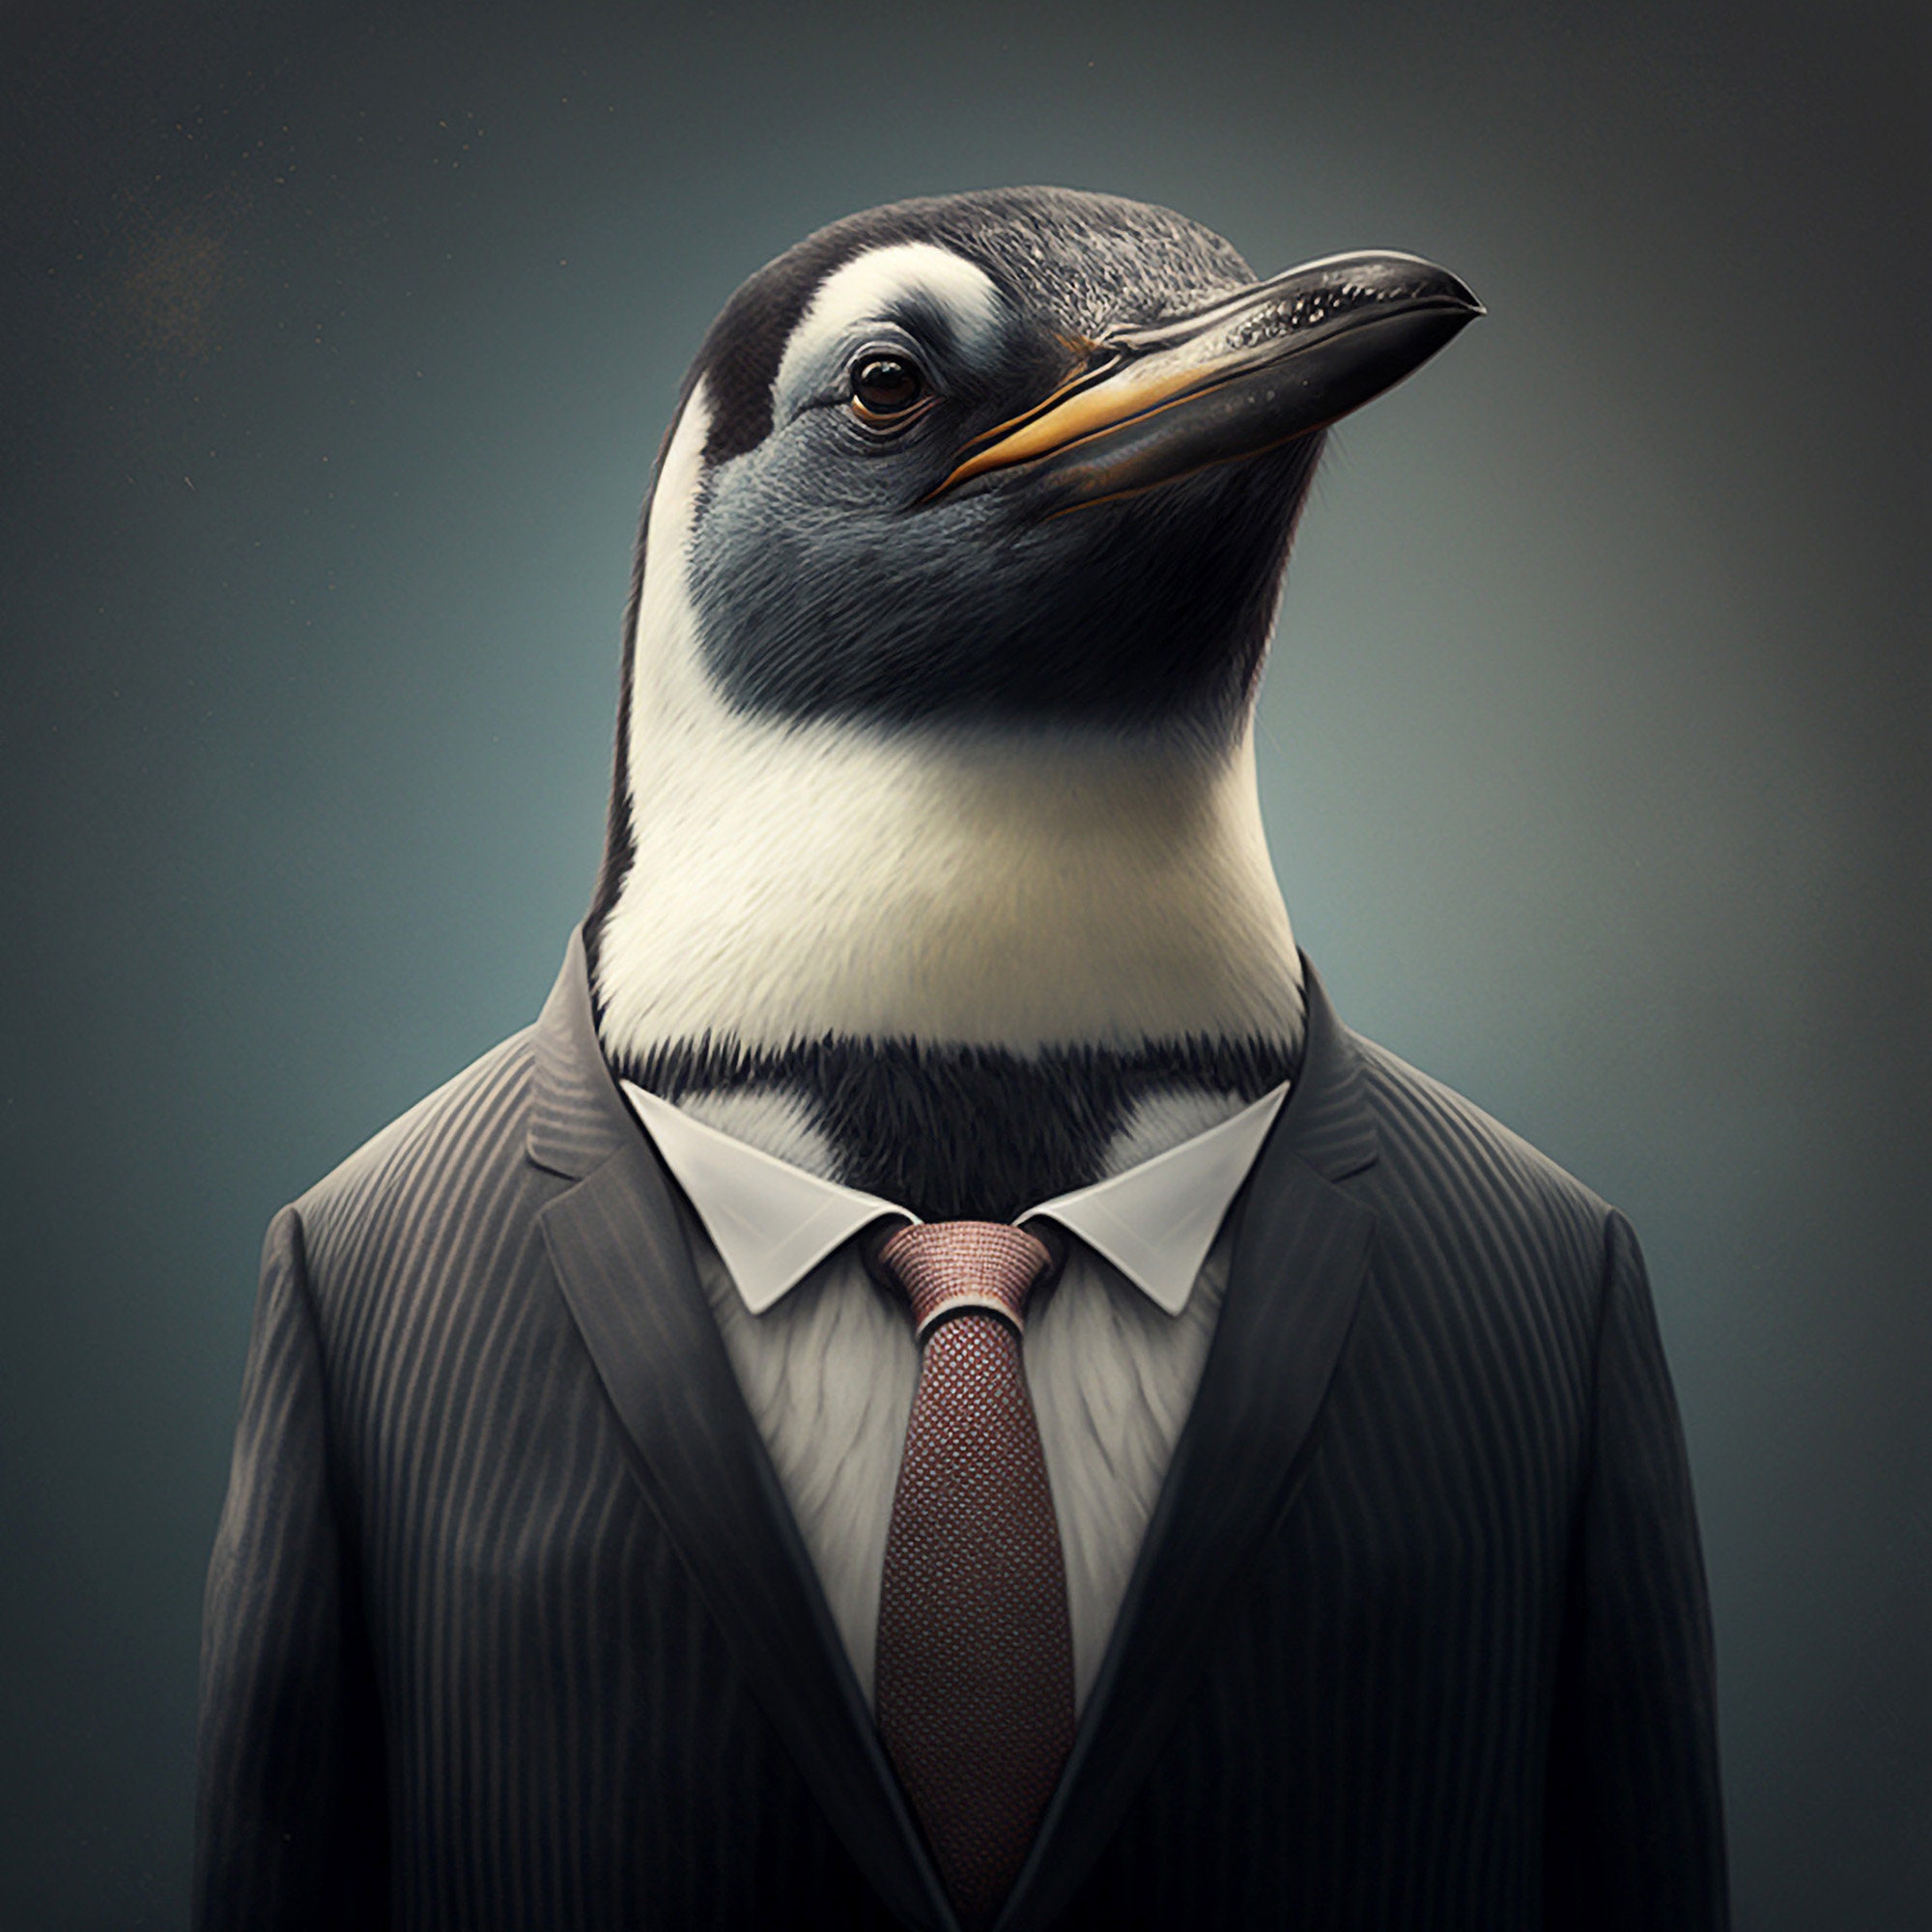 Penguin in Suit Digital - Room Animal Download Etsy Portrait, Wall Penguin Yourself Decoration Animal Motif Print Decoration